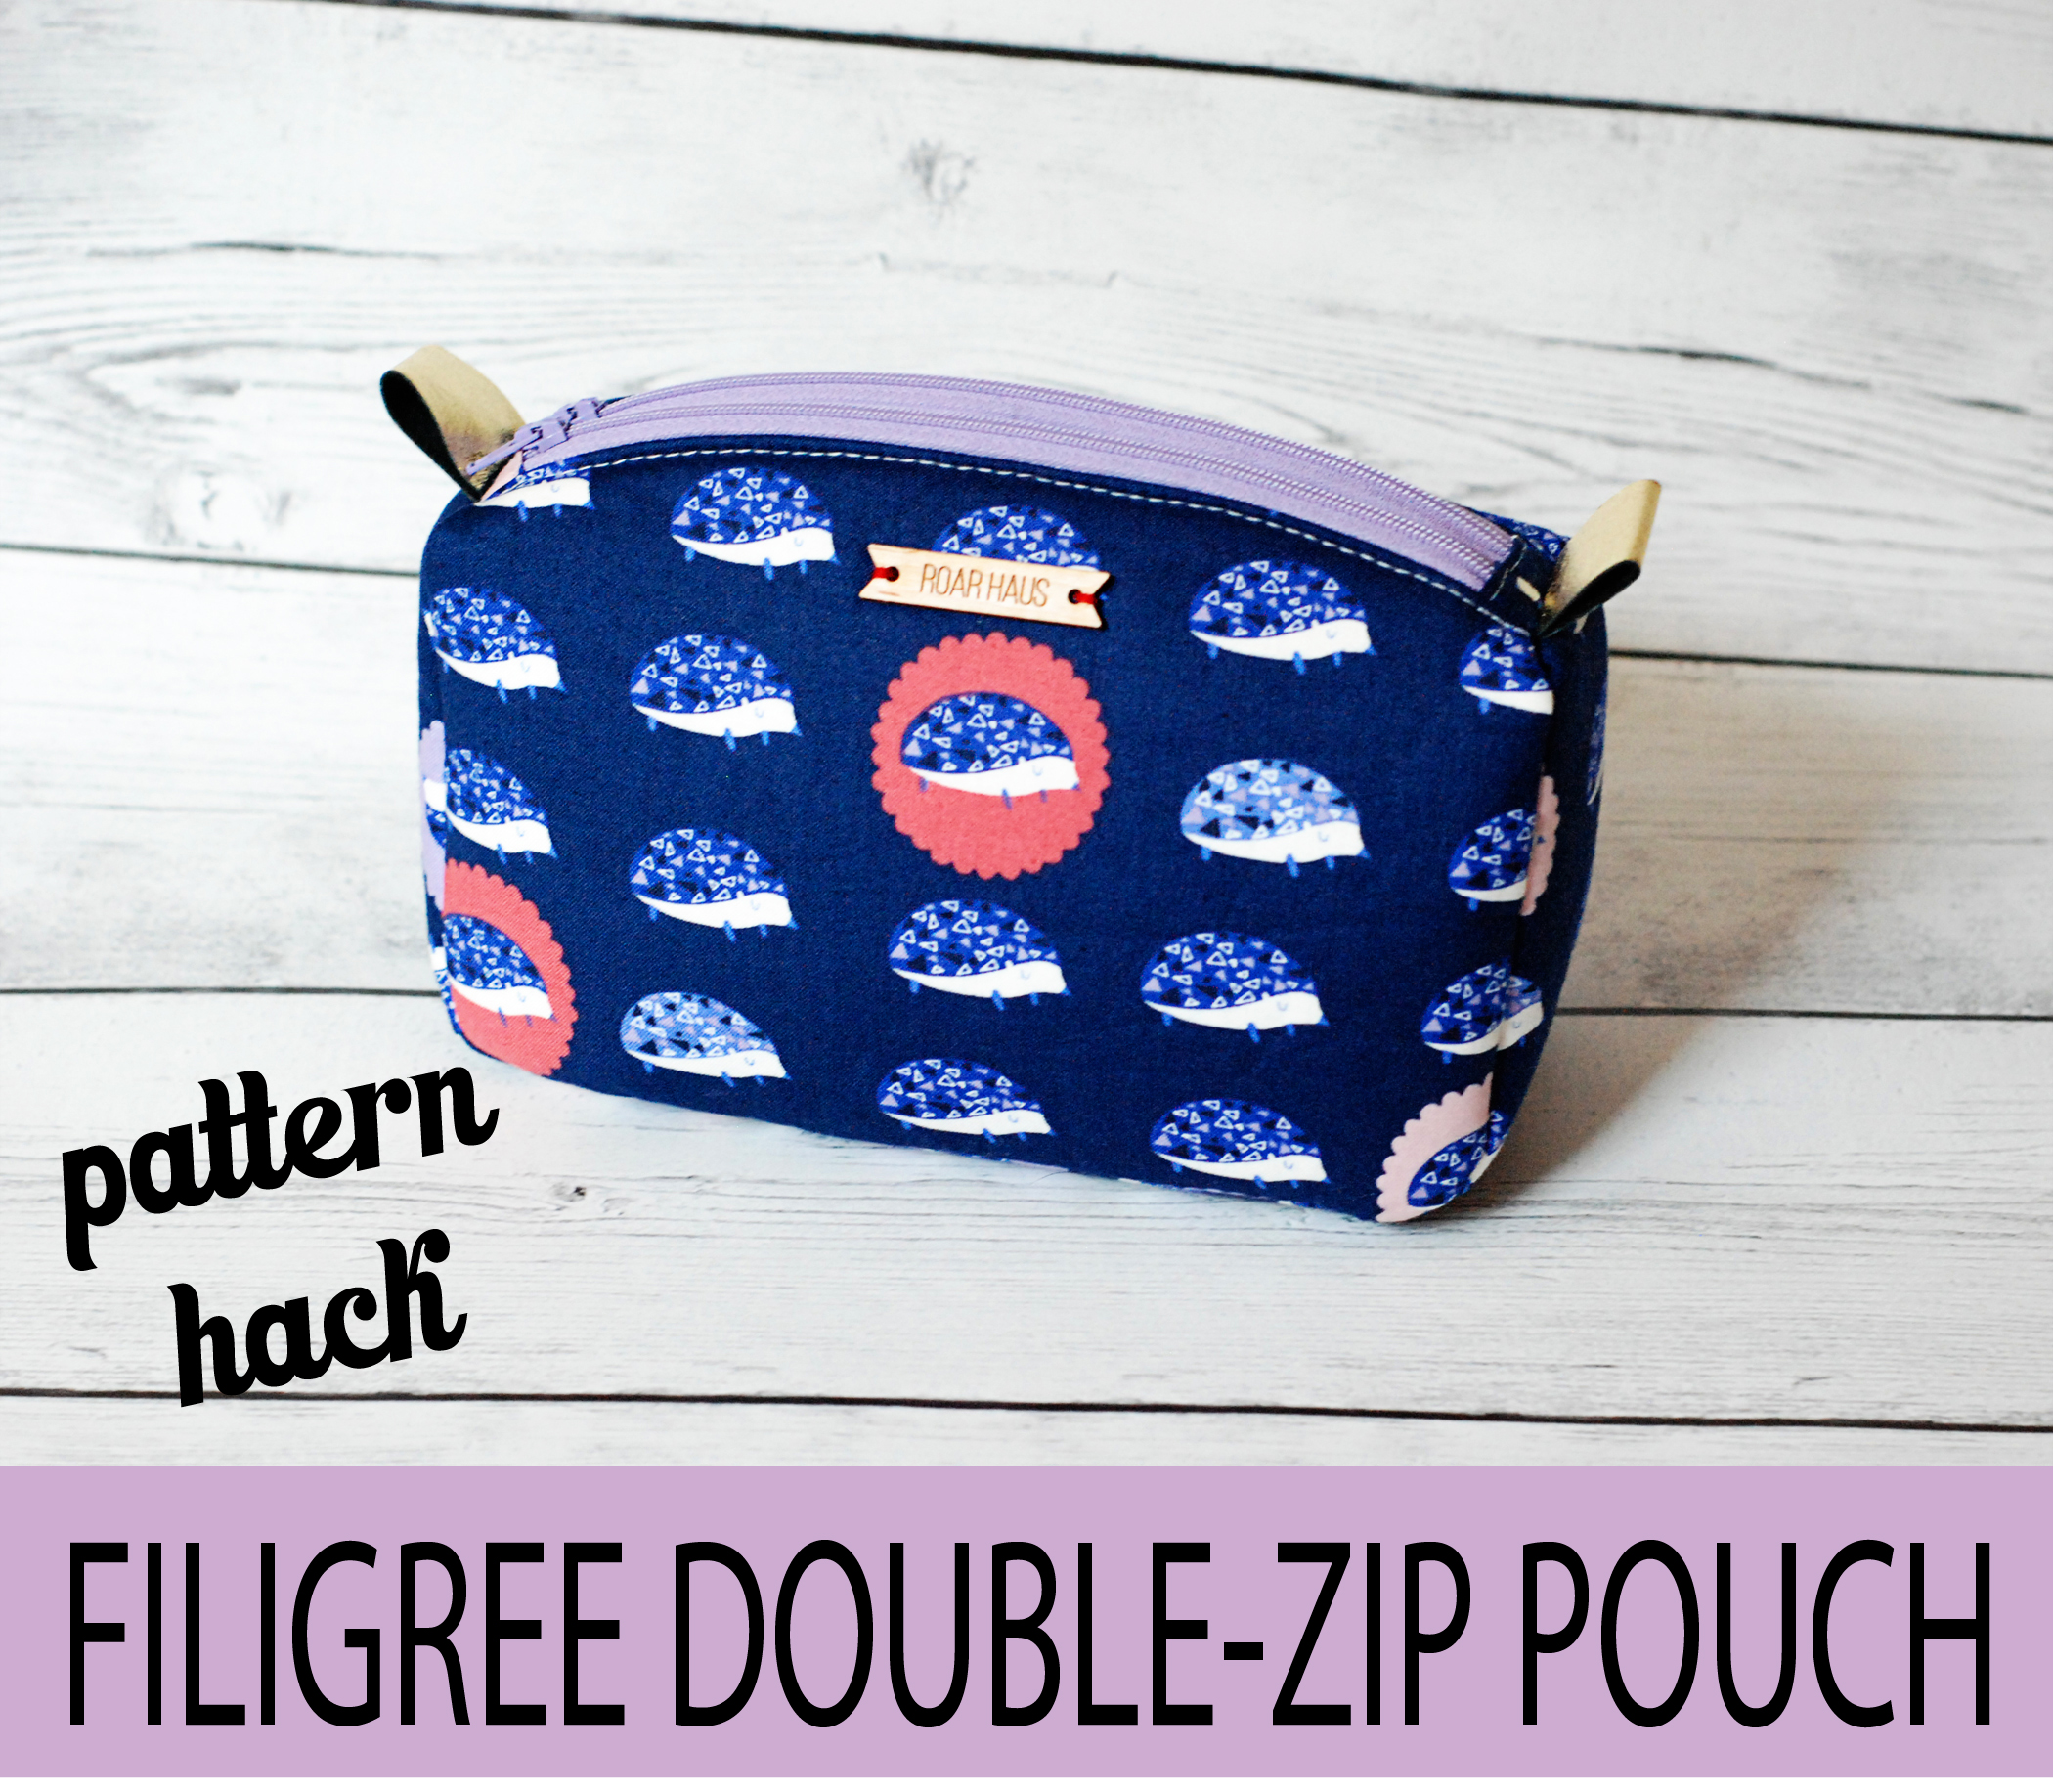 Pattern Hack - Filigree Double-Zip Pouches - Sew Sweetness - 2100 x 1833 jpeg 2086kB